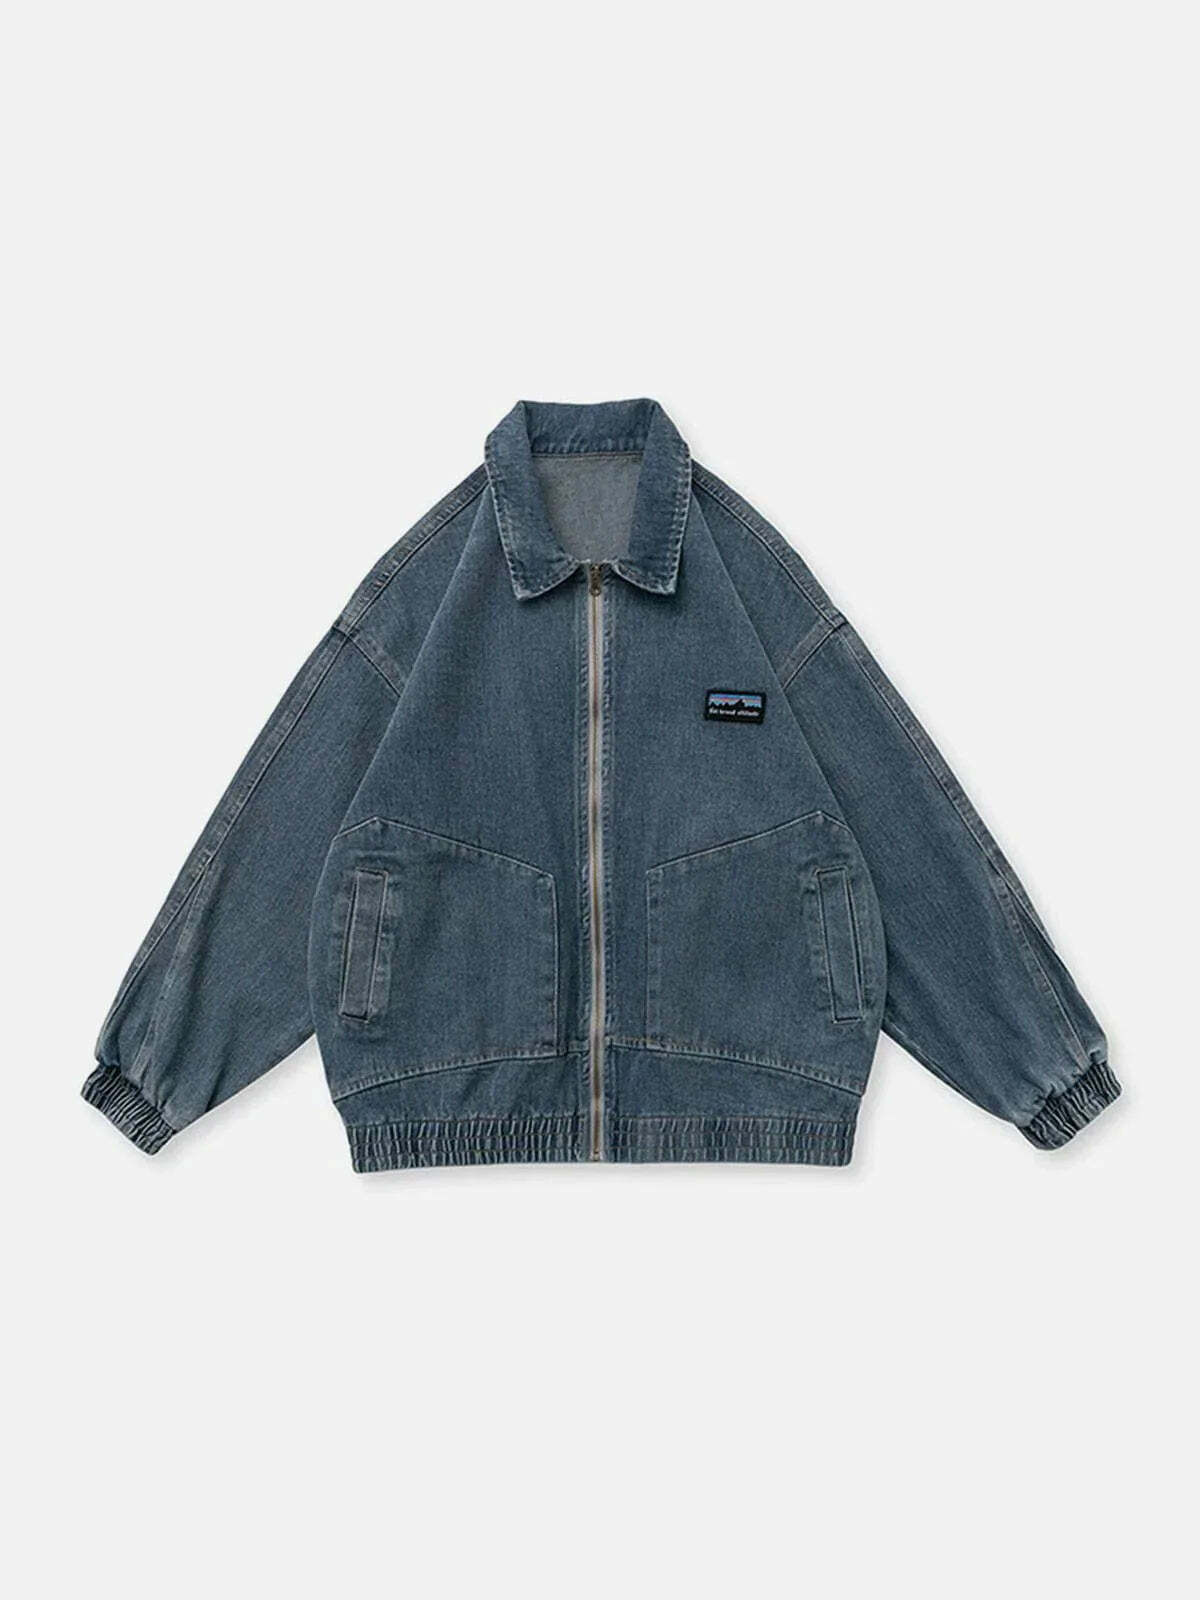 edgy distressed denim jacket solid color streetwear 1130